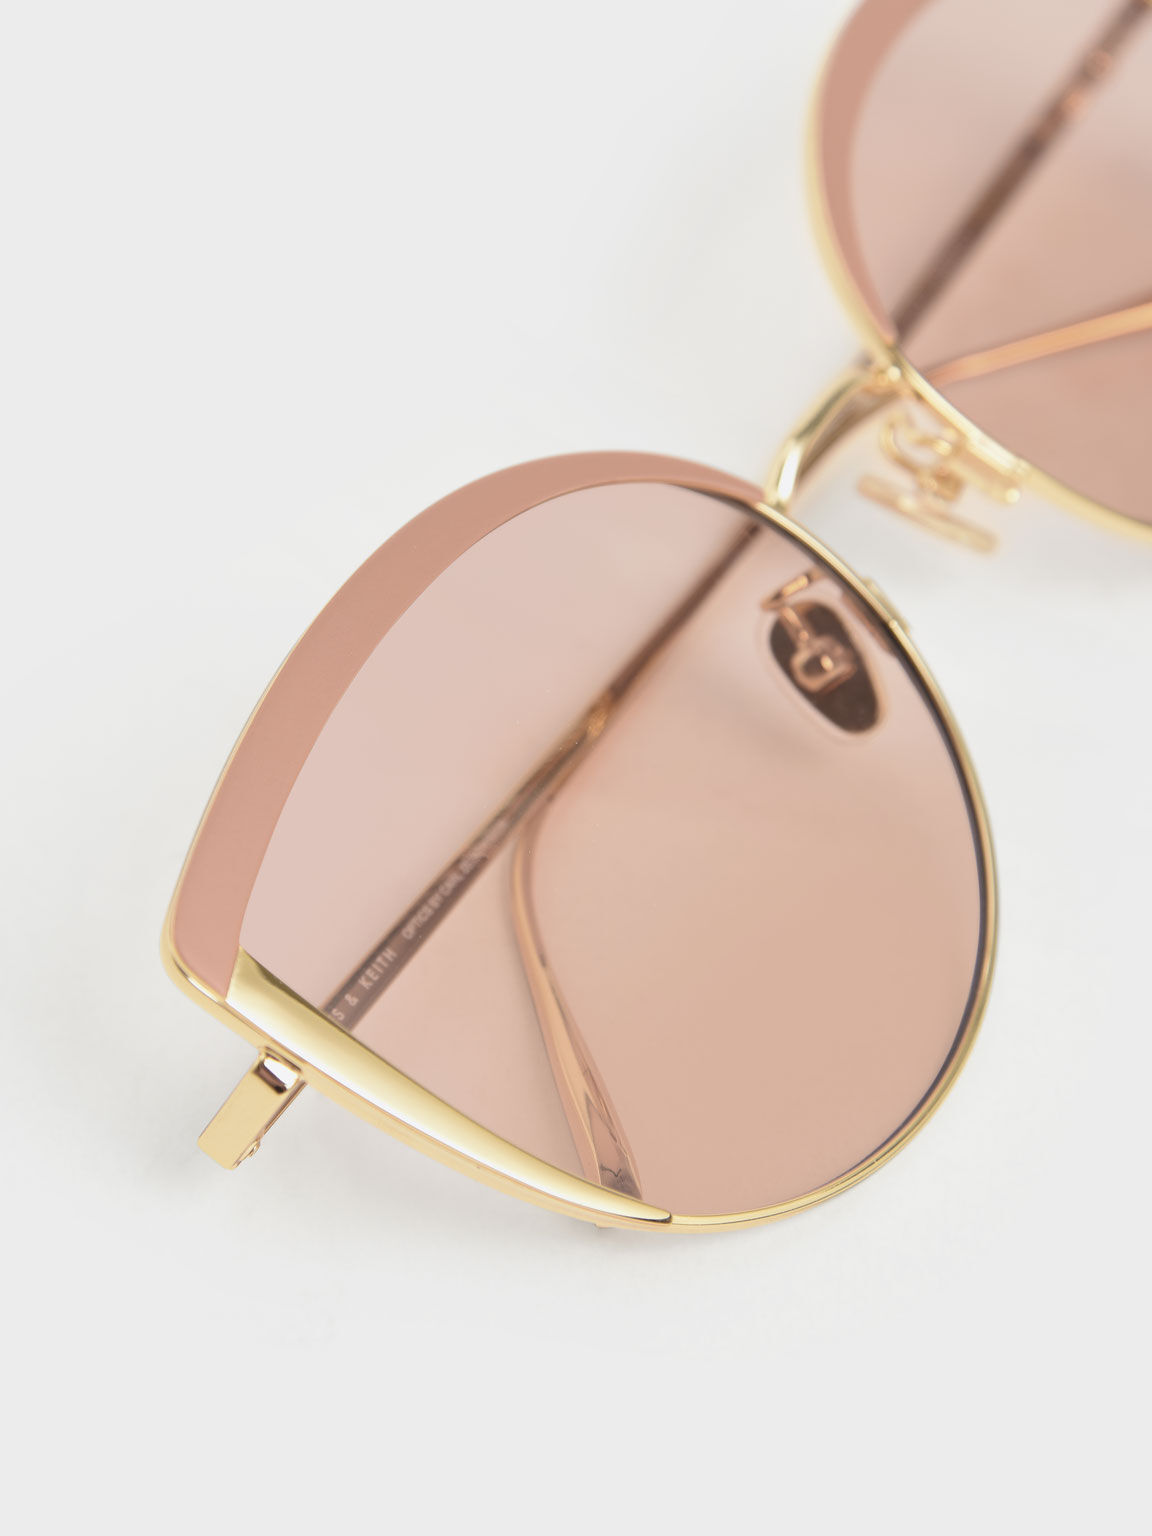 Thin Metal Frame Cat-Eye Sunglasses, Pink, hi-res